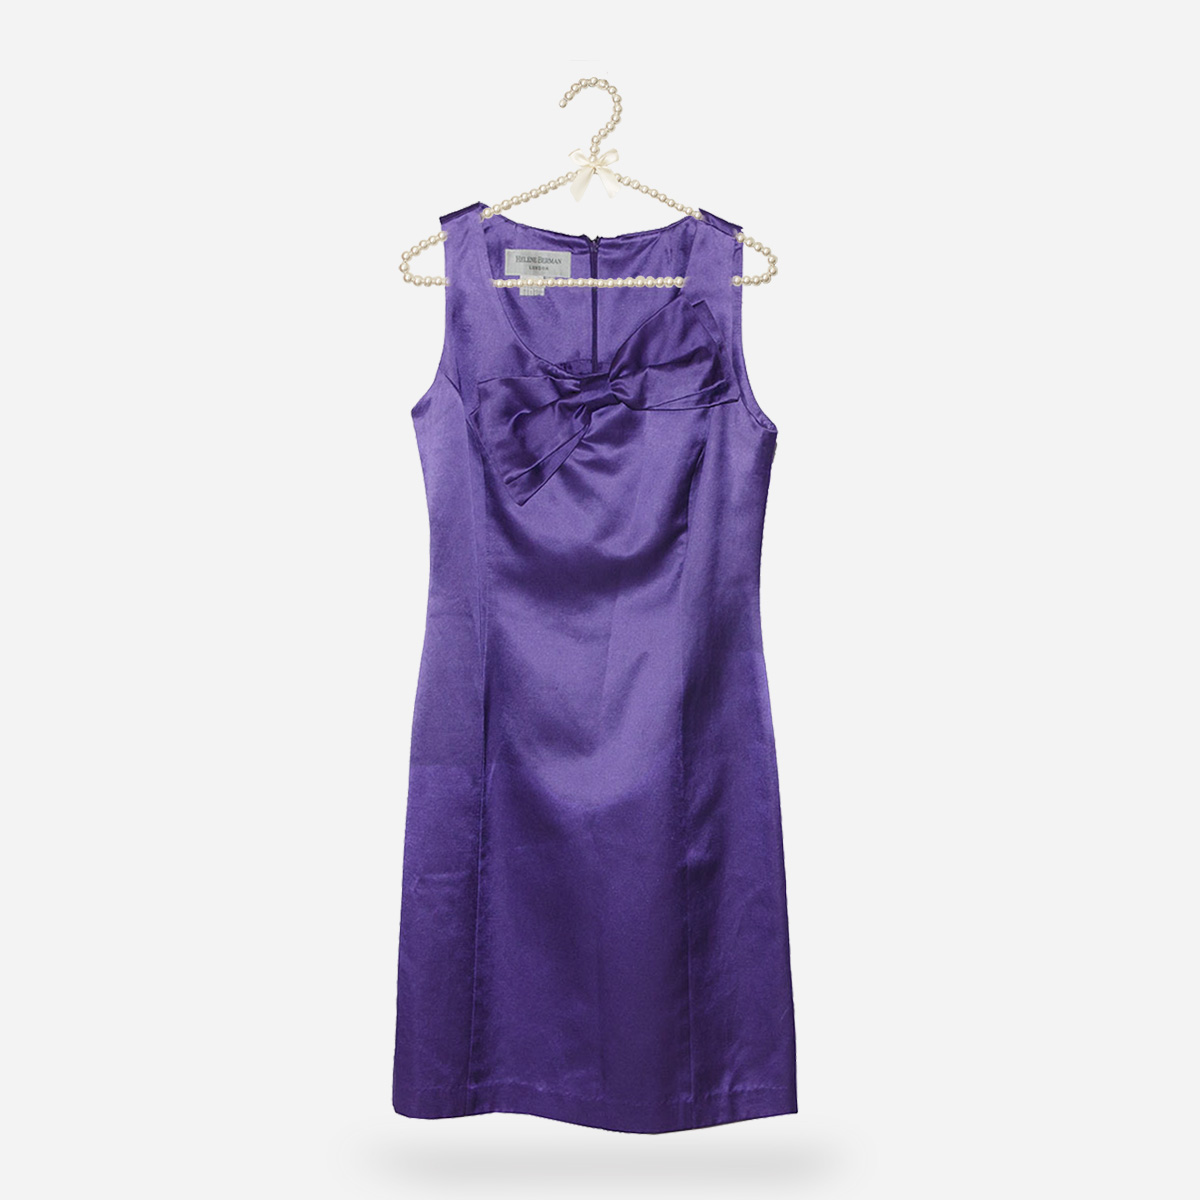 1990s purple sleeveless dress